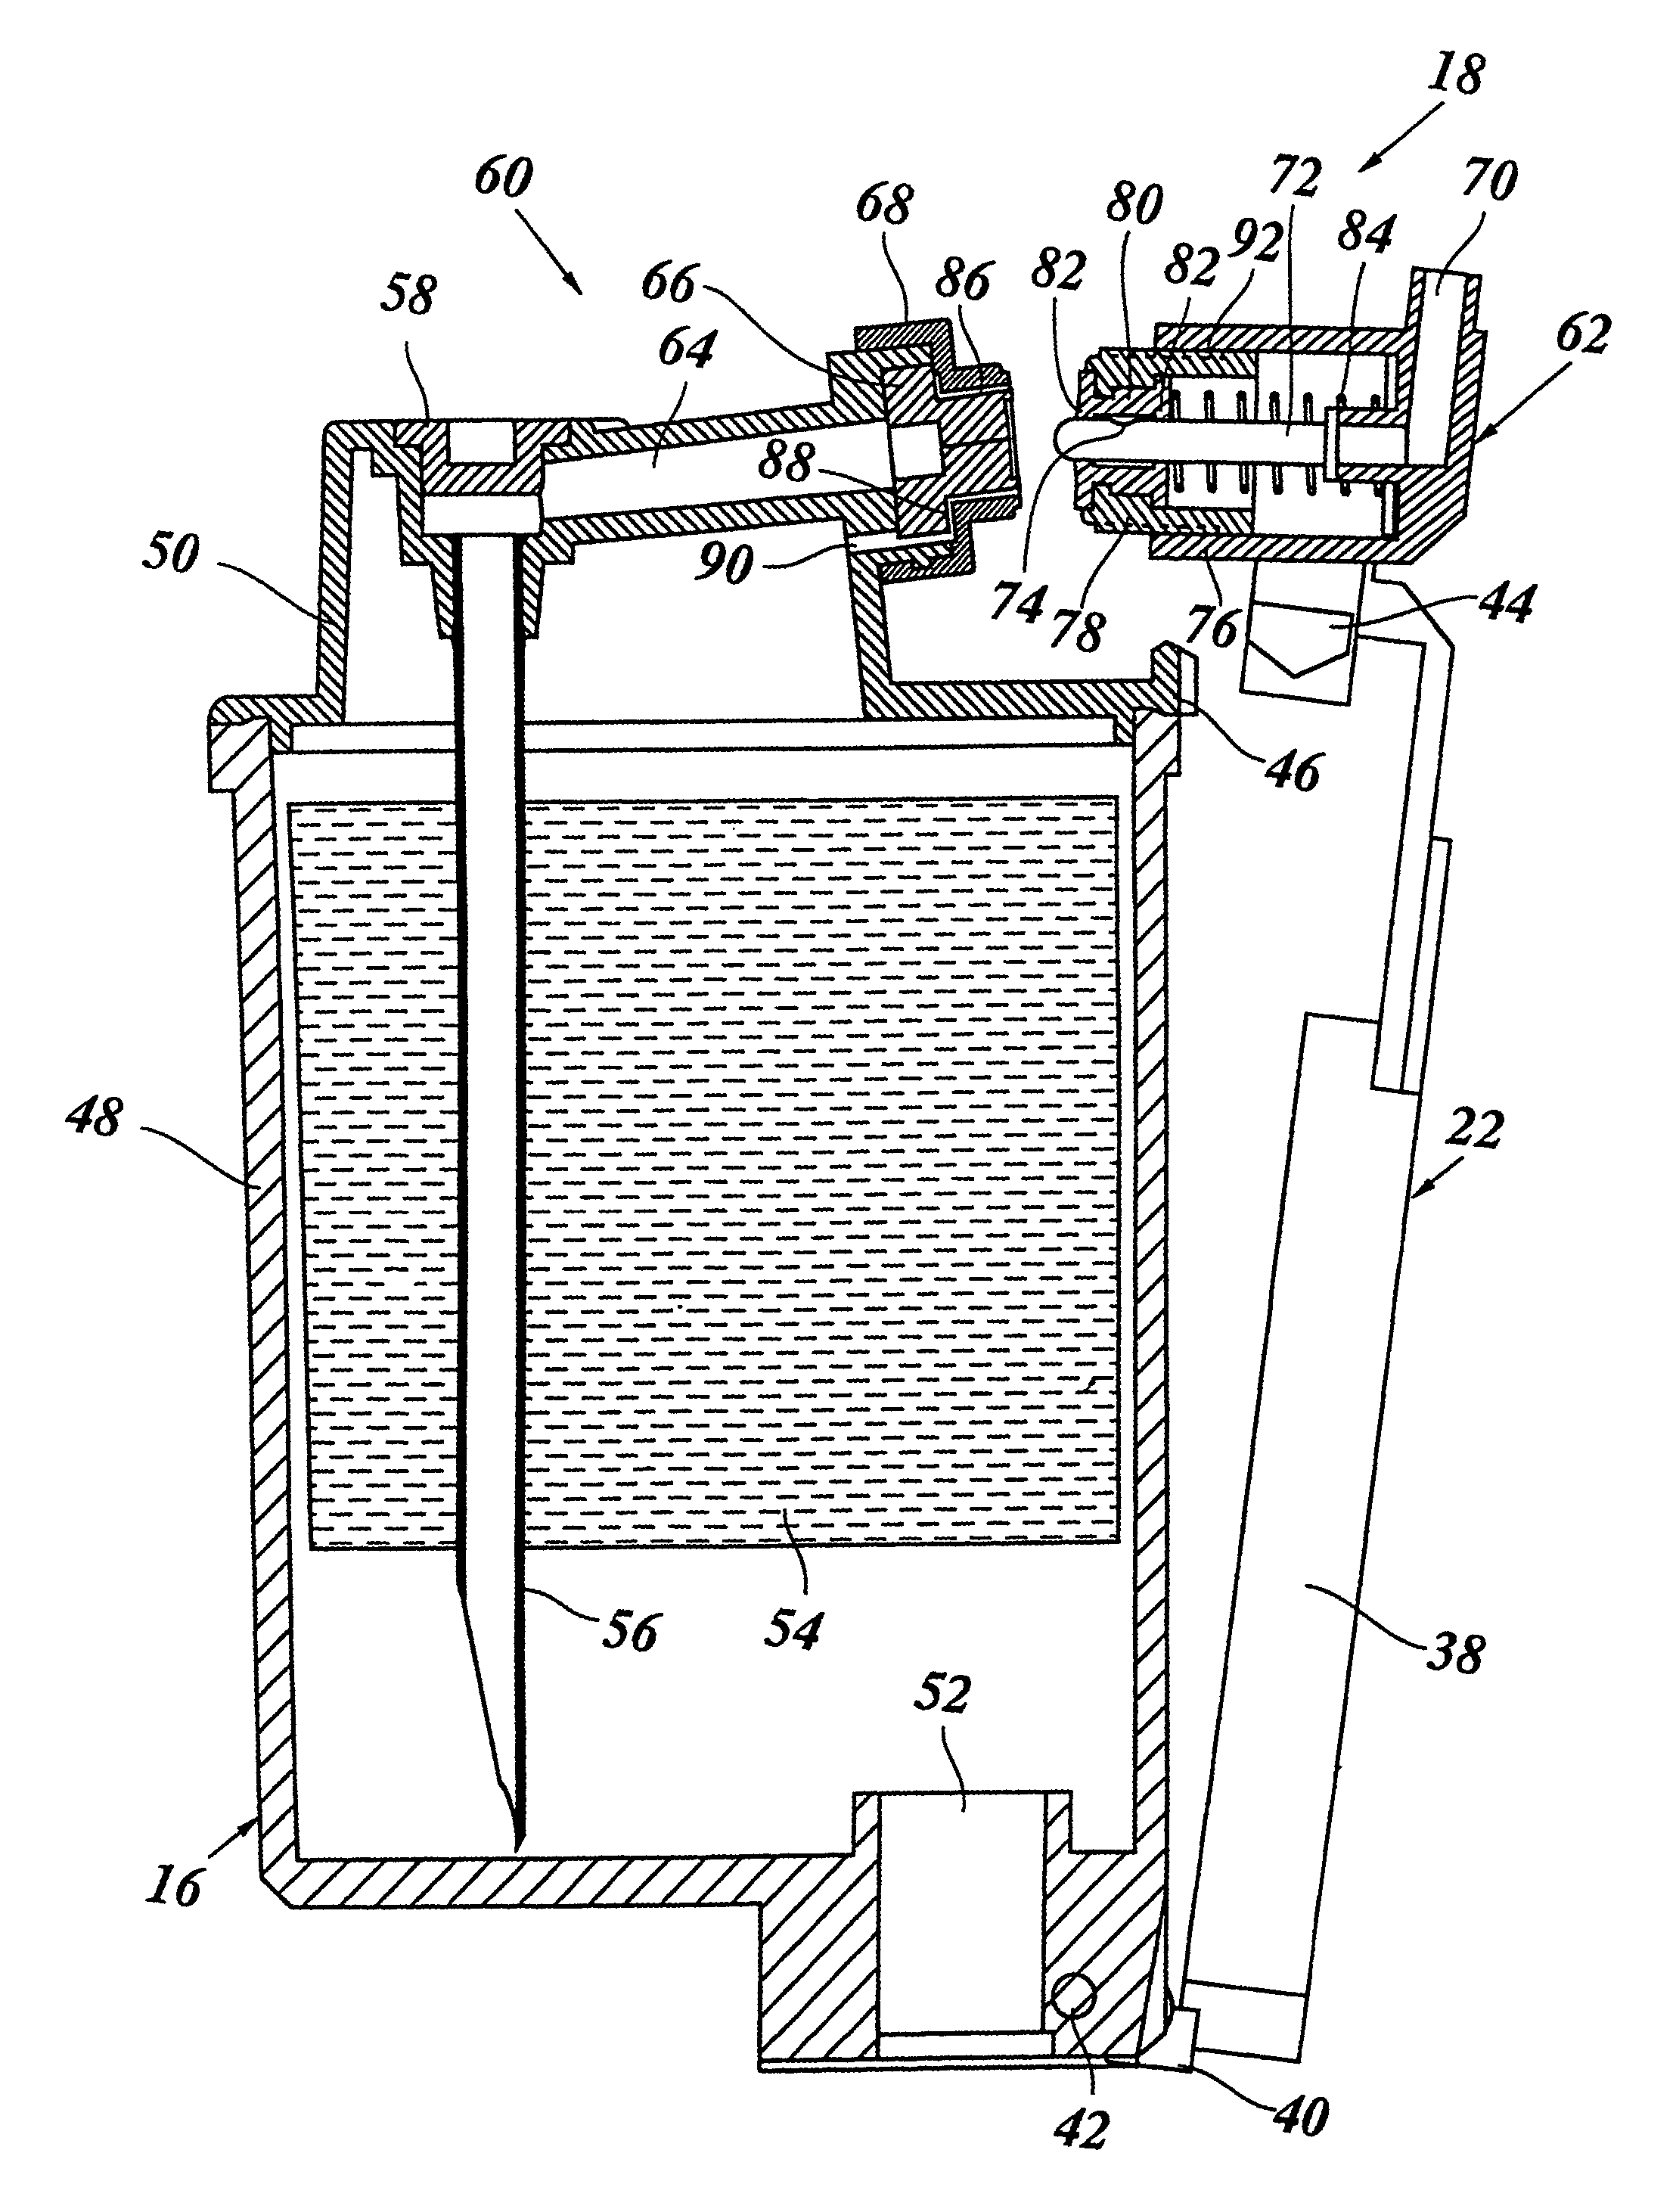 Ink supply system for an ink jet printer